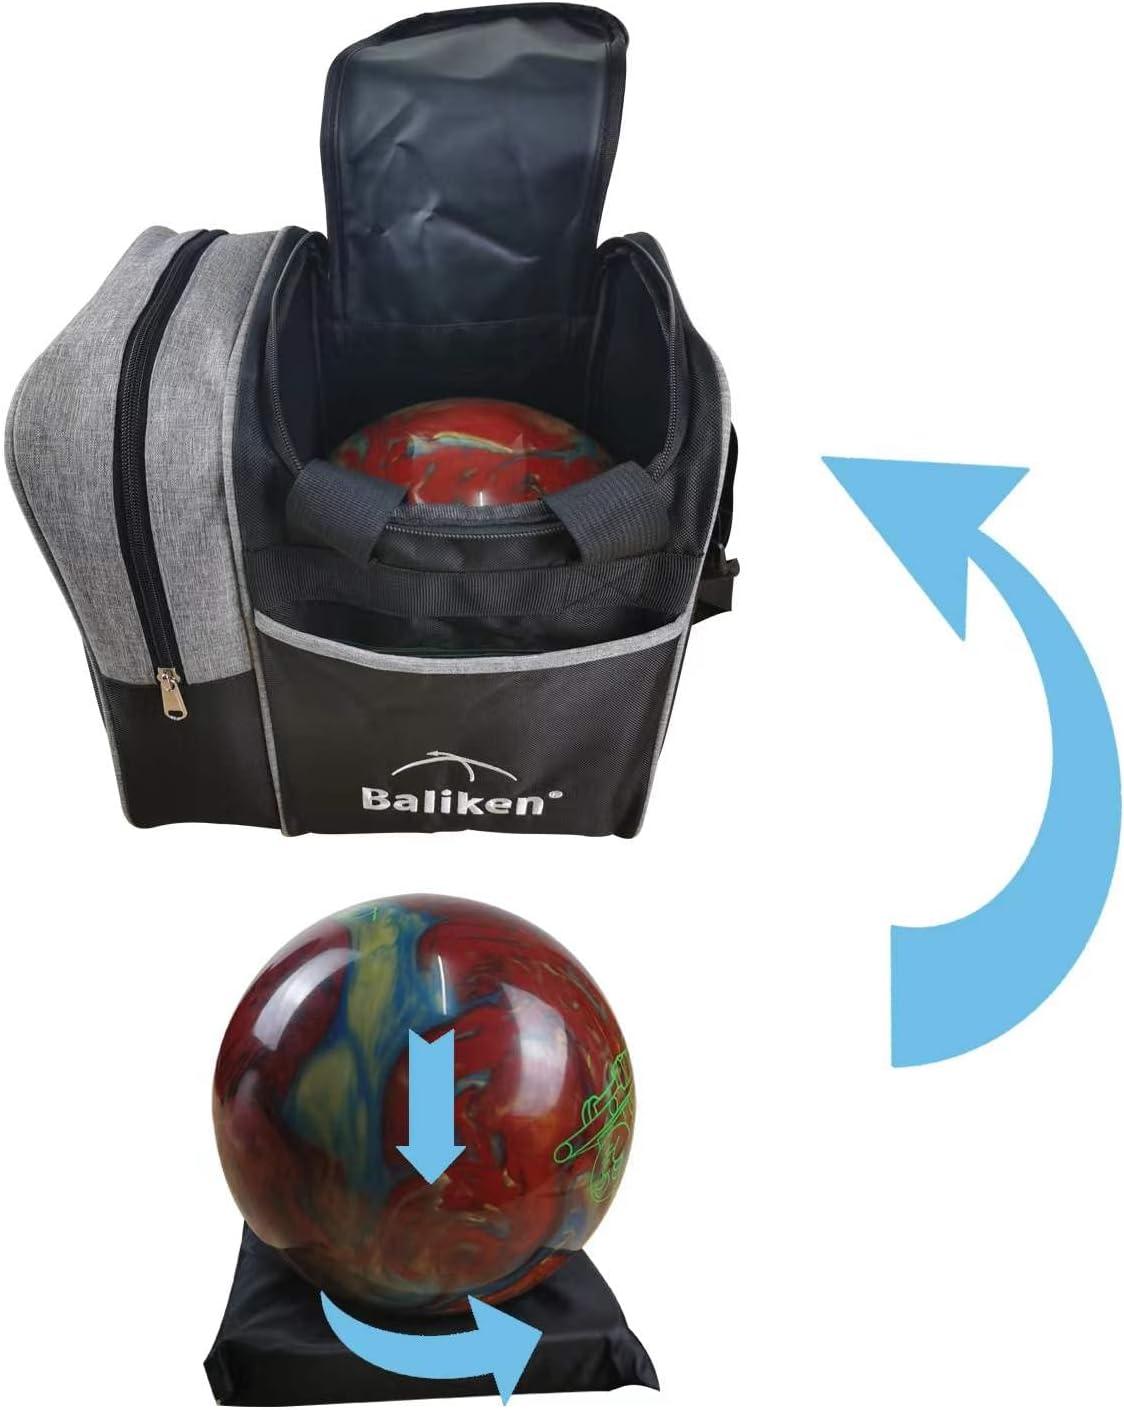 BALIKEN Single Bowling Ball Tote Bowling Bag - Holds One Bowling